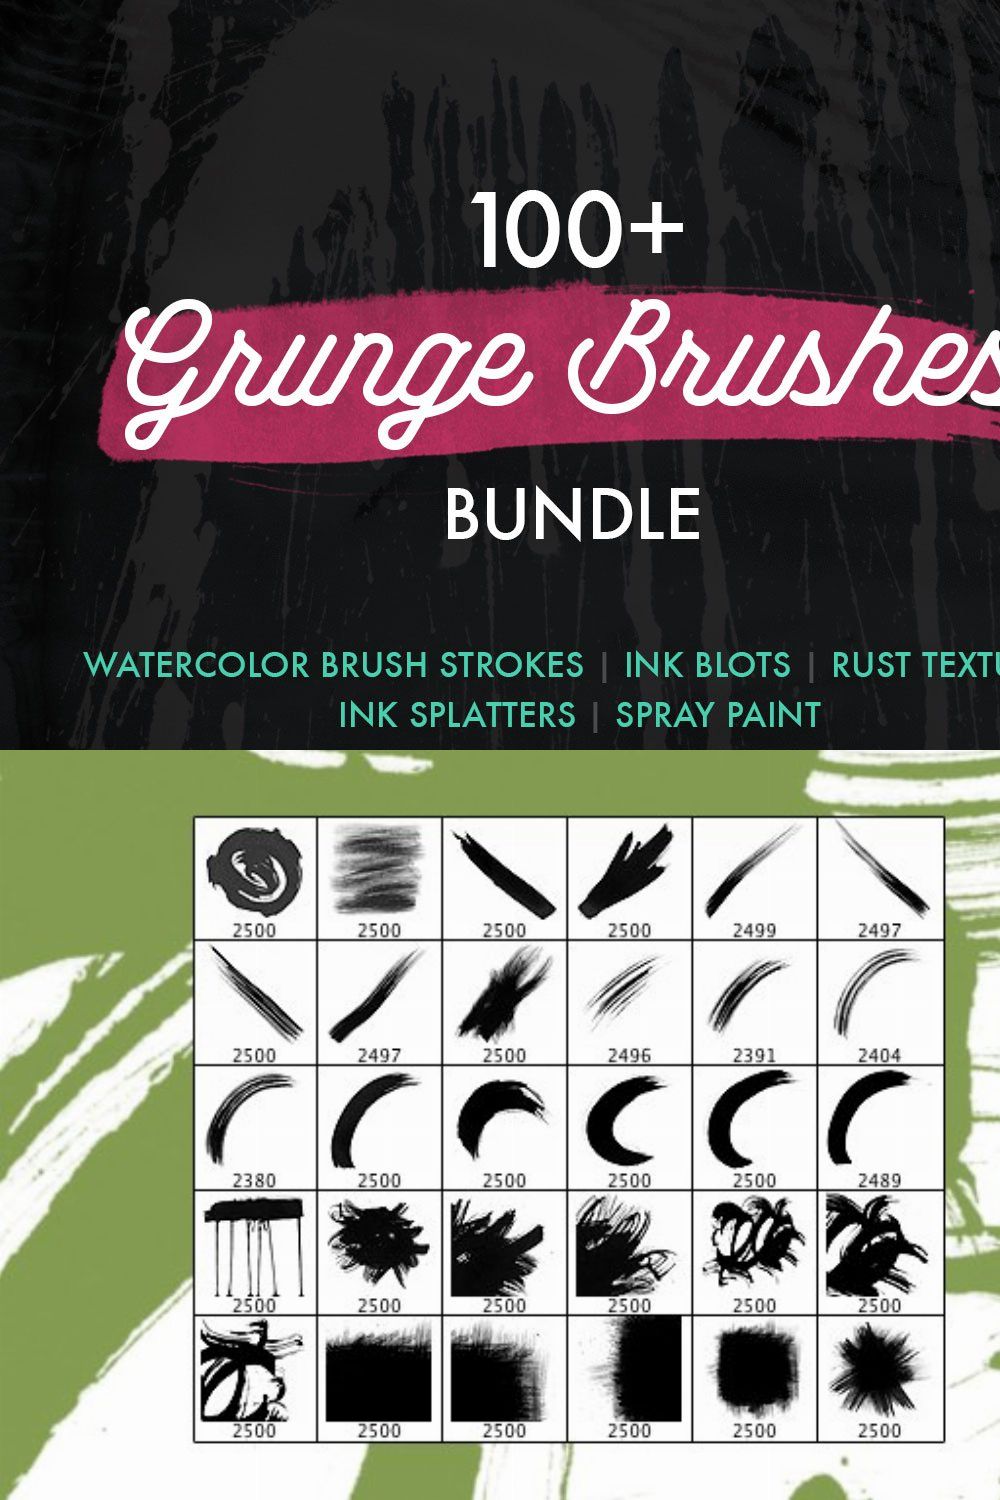 100+ Grunge Photoshop Brushes Bundle pinterest preview image.